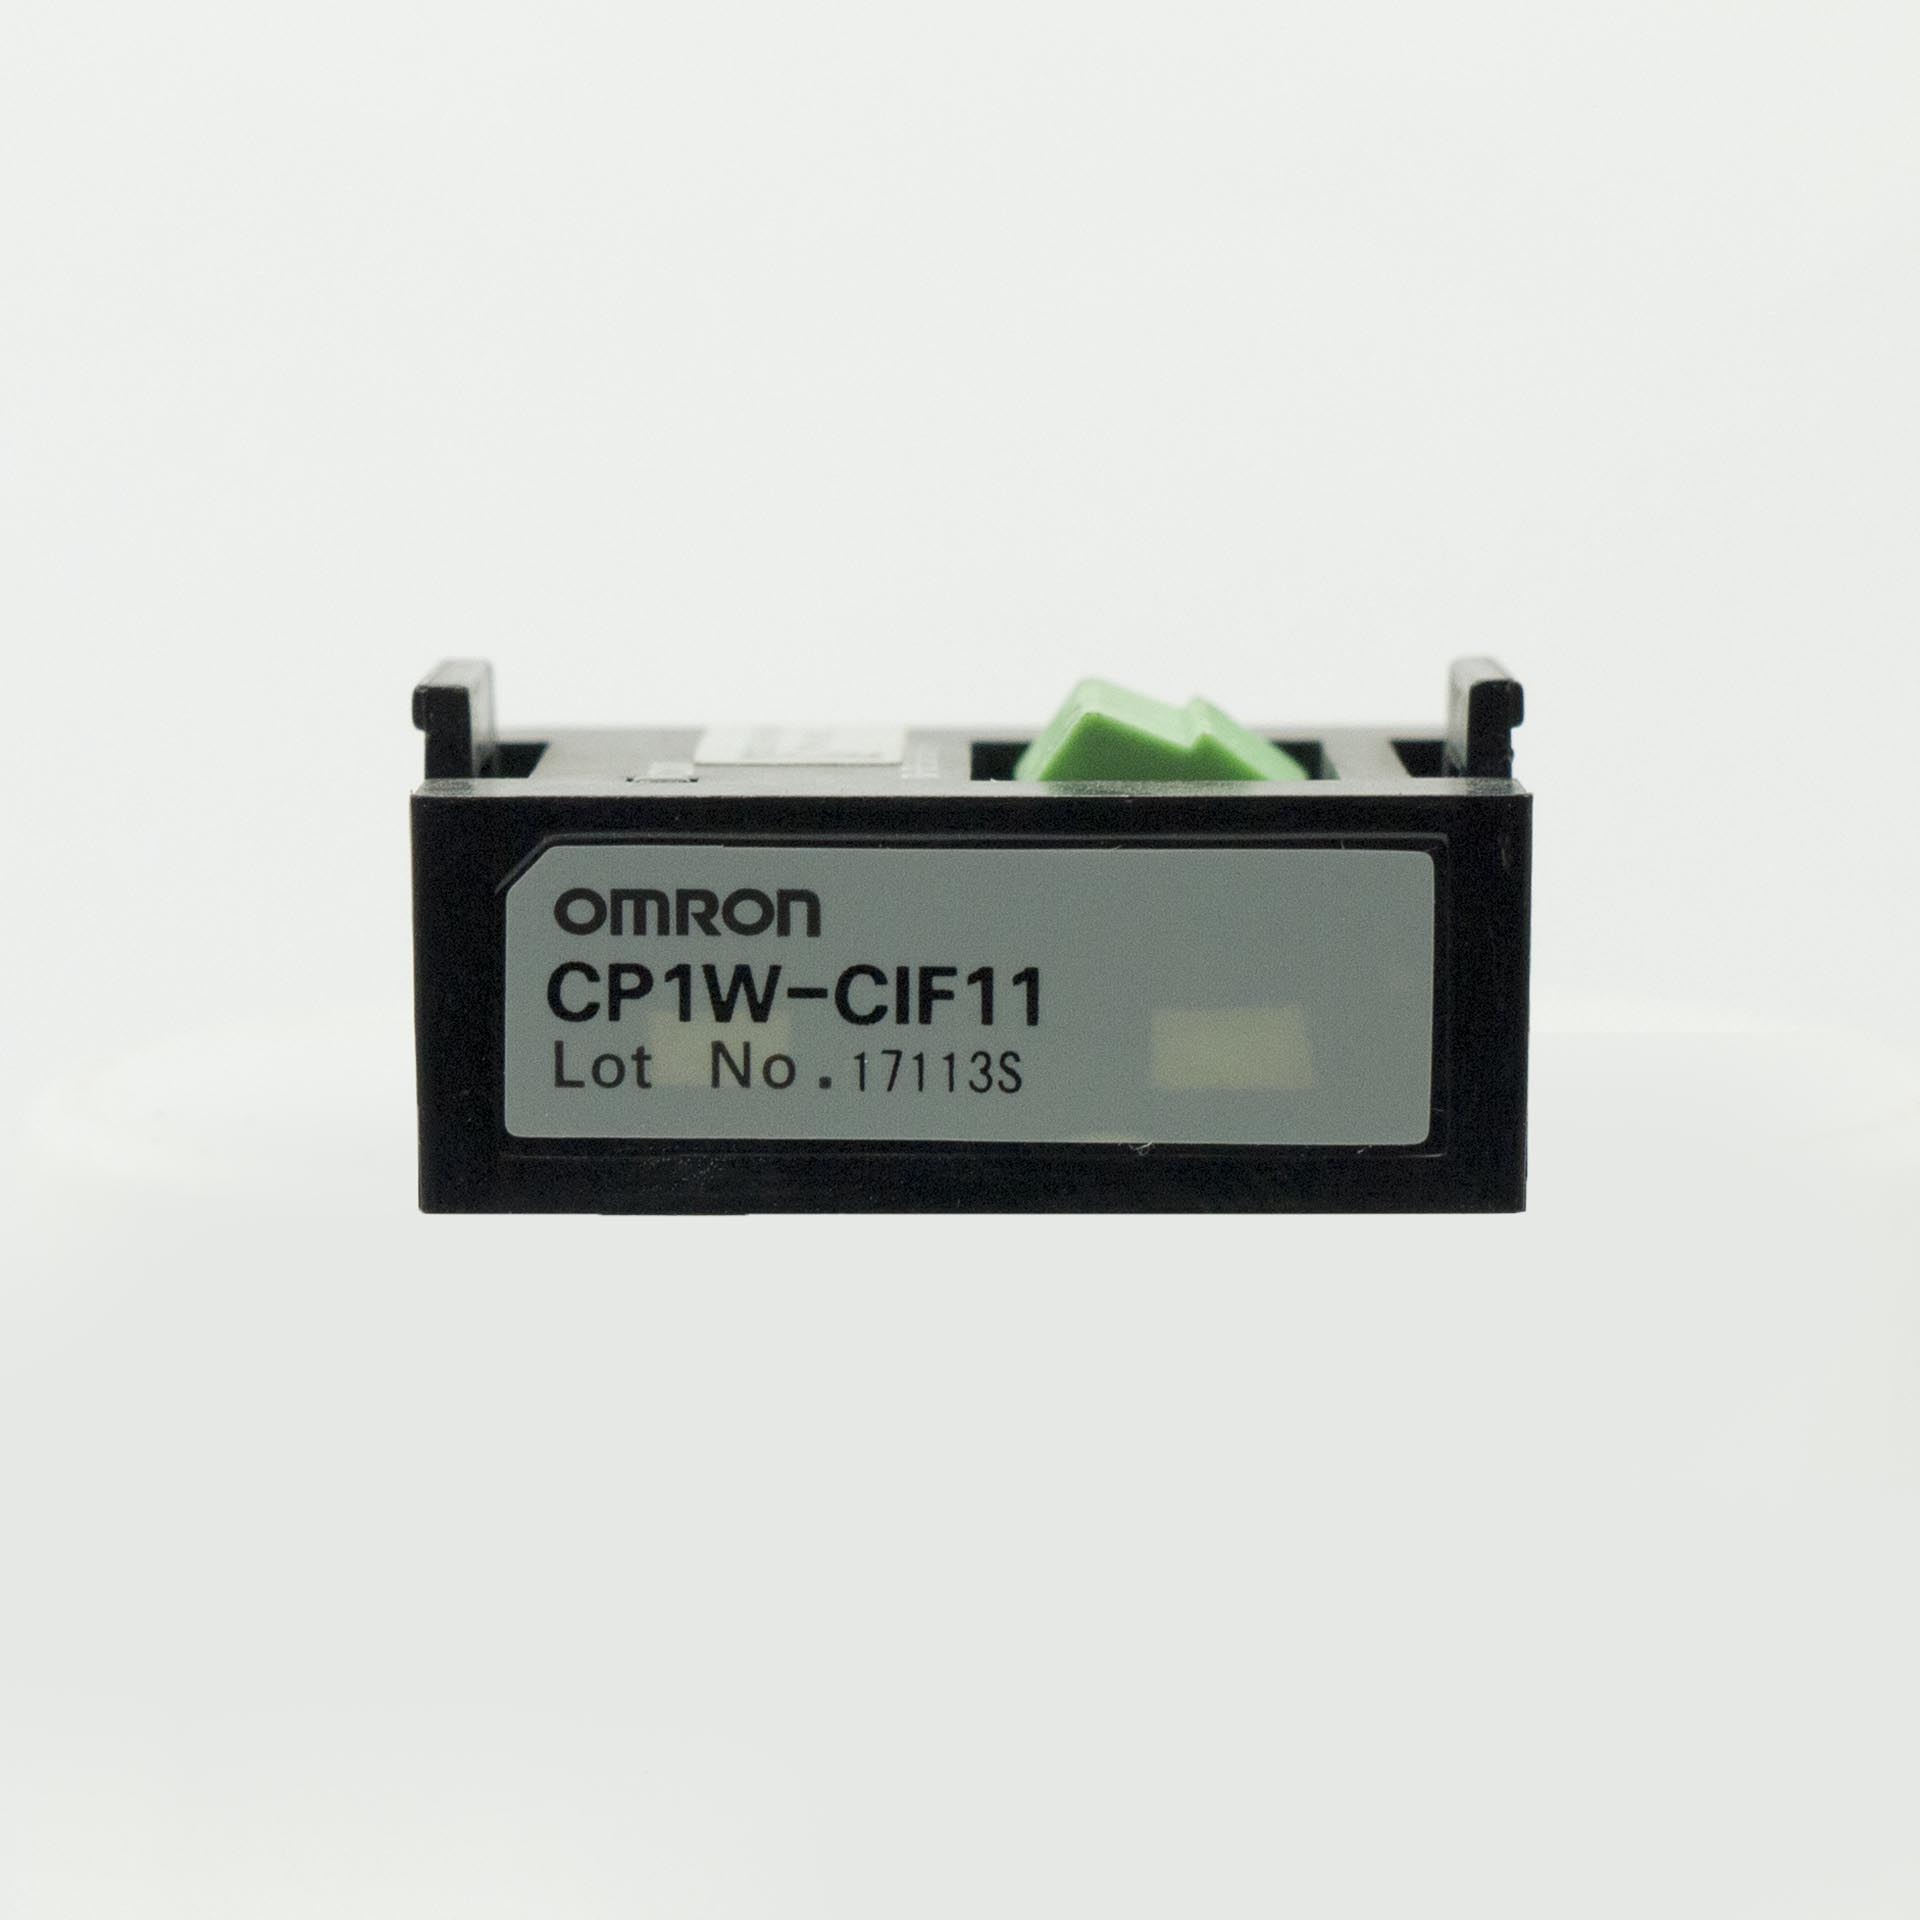 Omron CP1W-CIF11